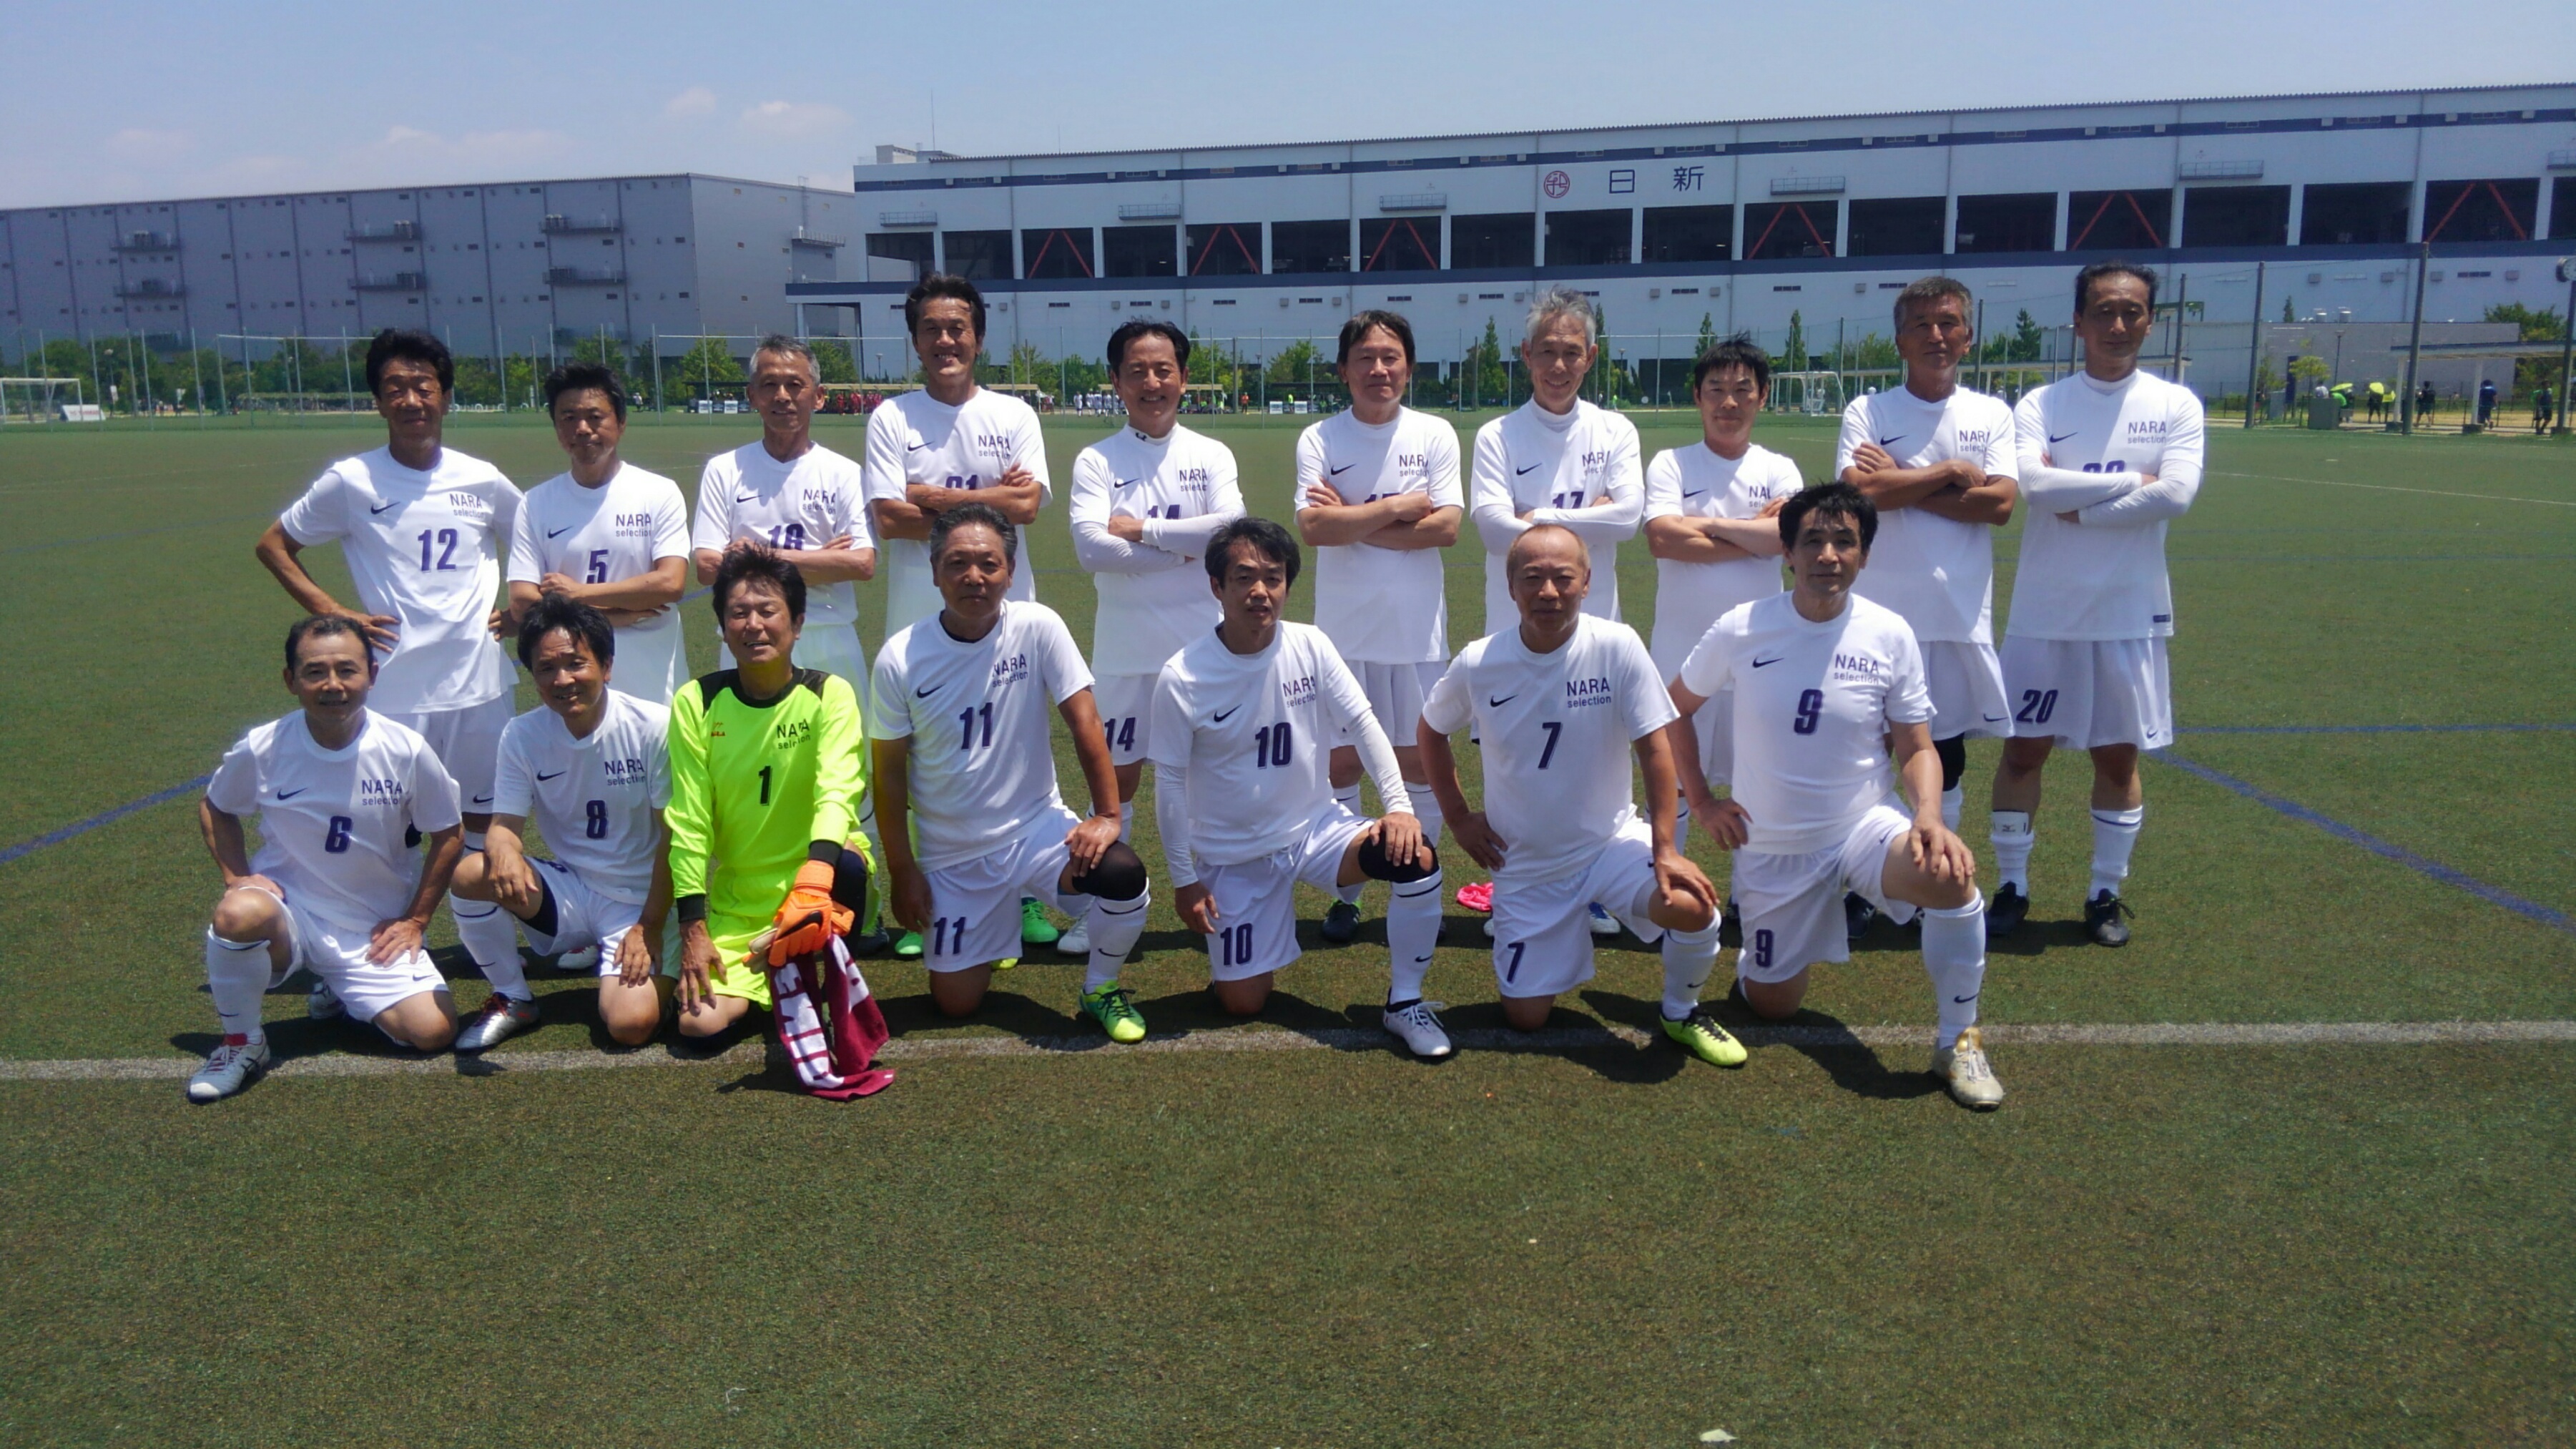 21season 大会 Nara Senior Football Federation